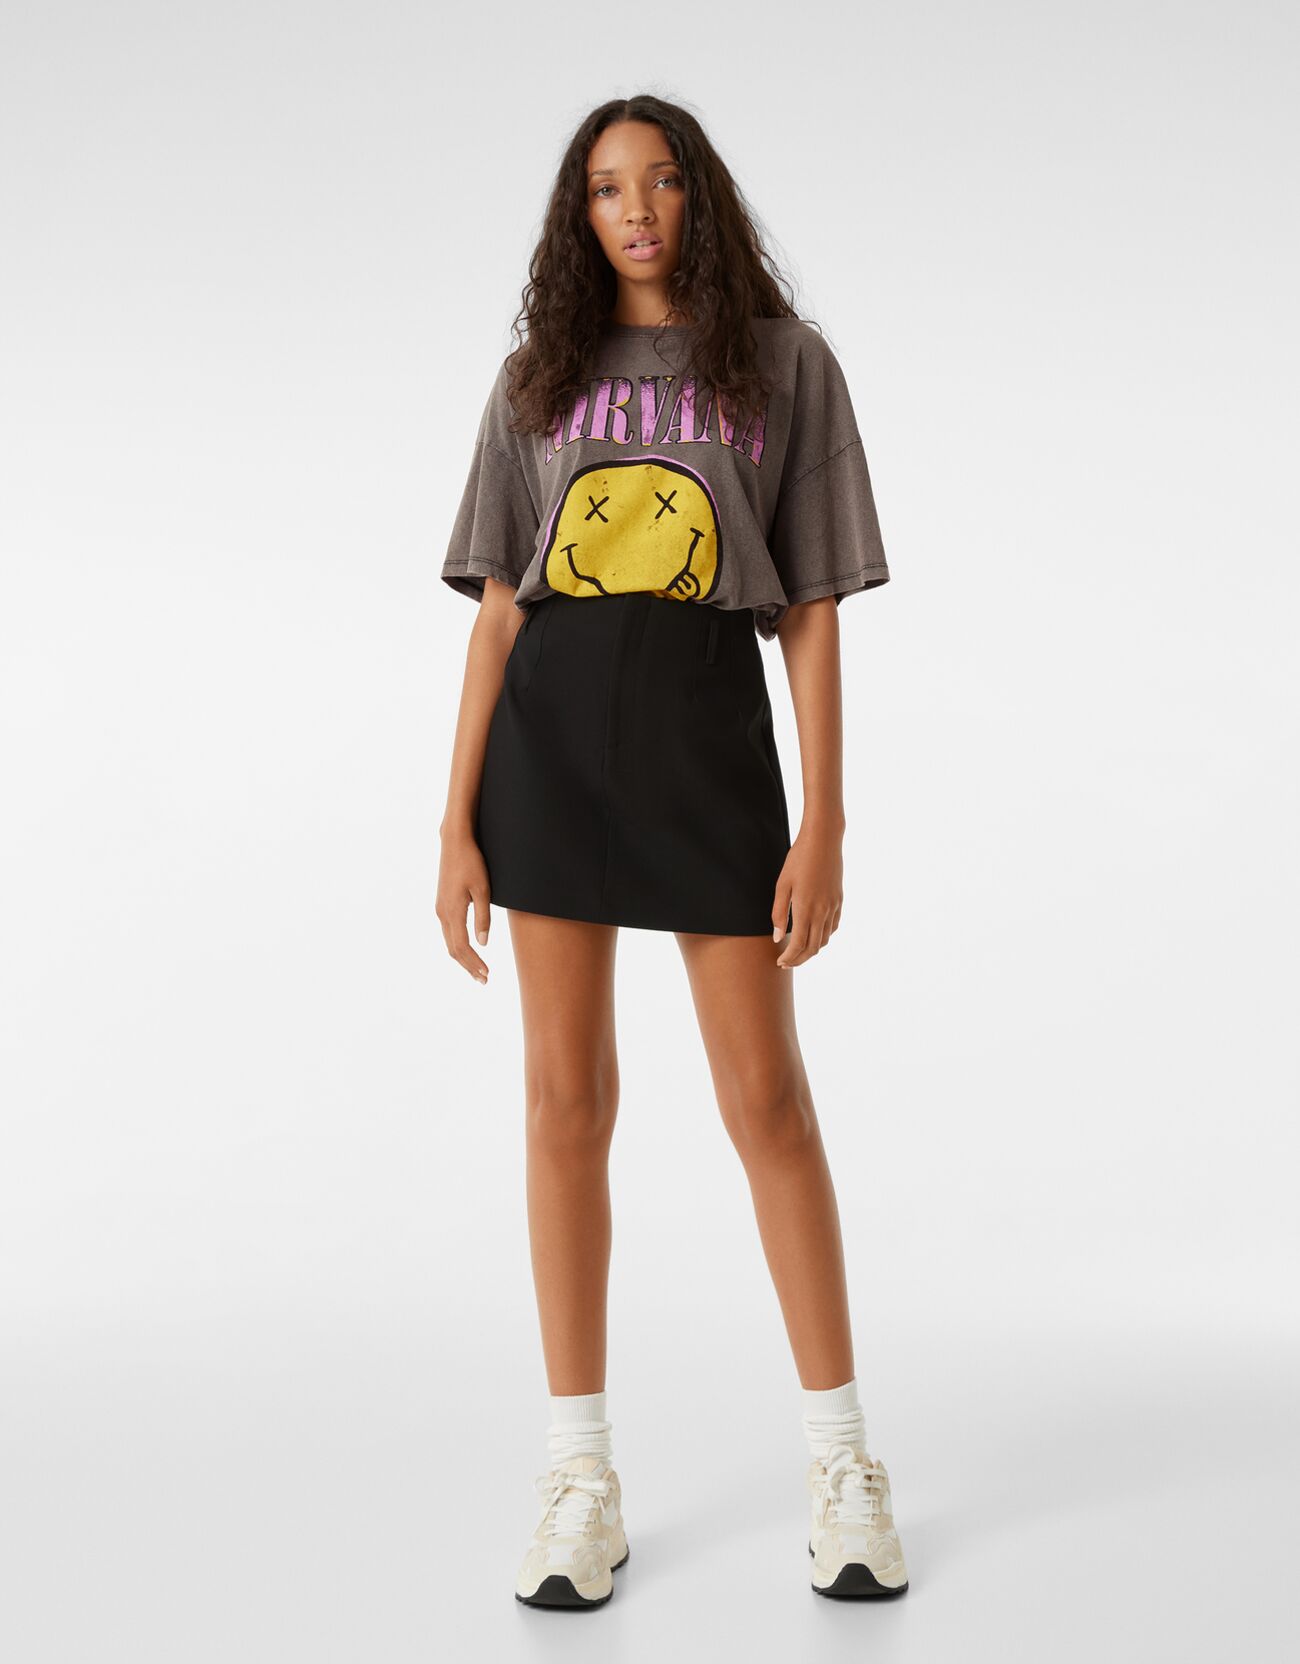 Bershka Camiseta Manga Corta Print Nirvana Mujer Xs Gris